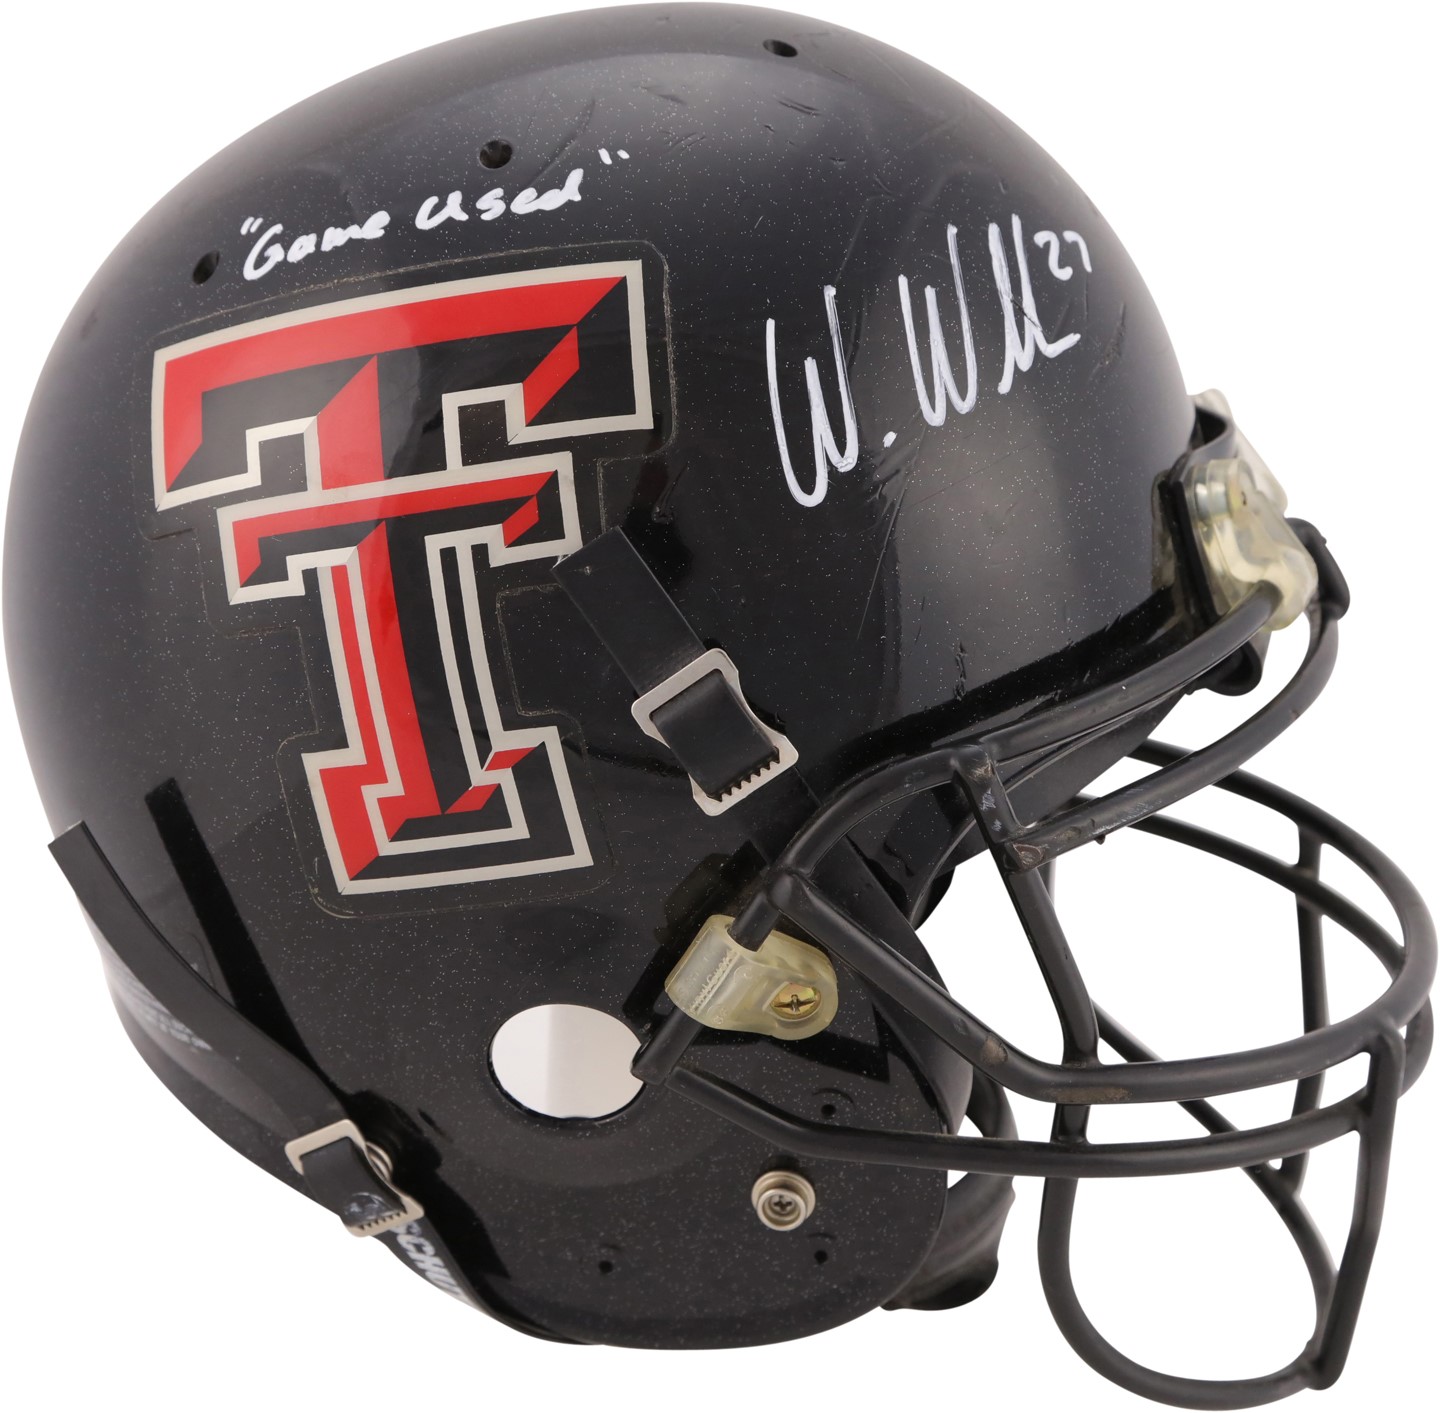 - Wes Welker Texas Tech University Signed Game Worn Helmet